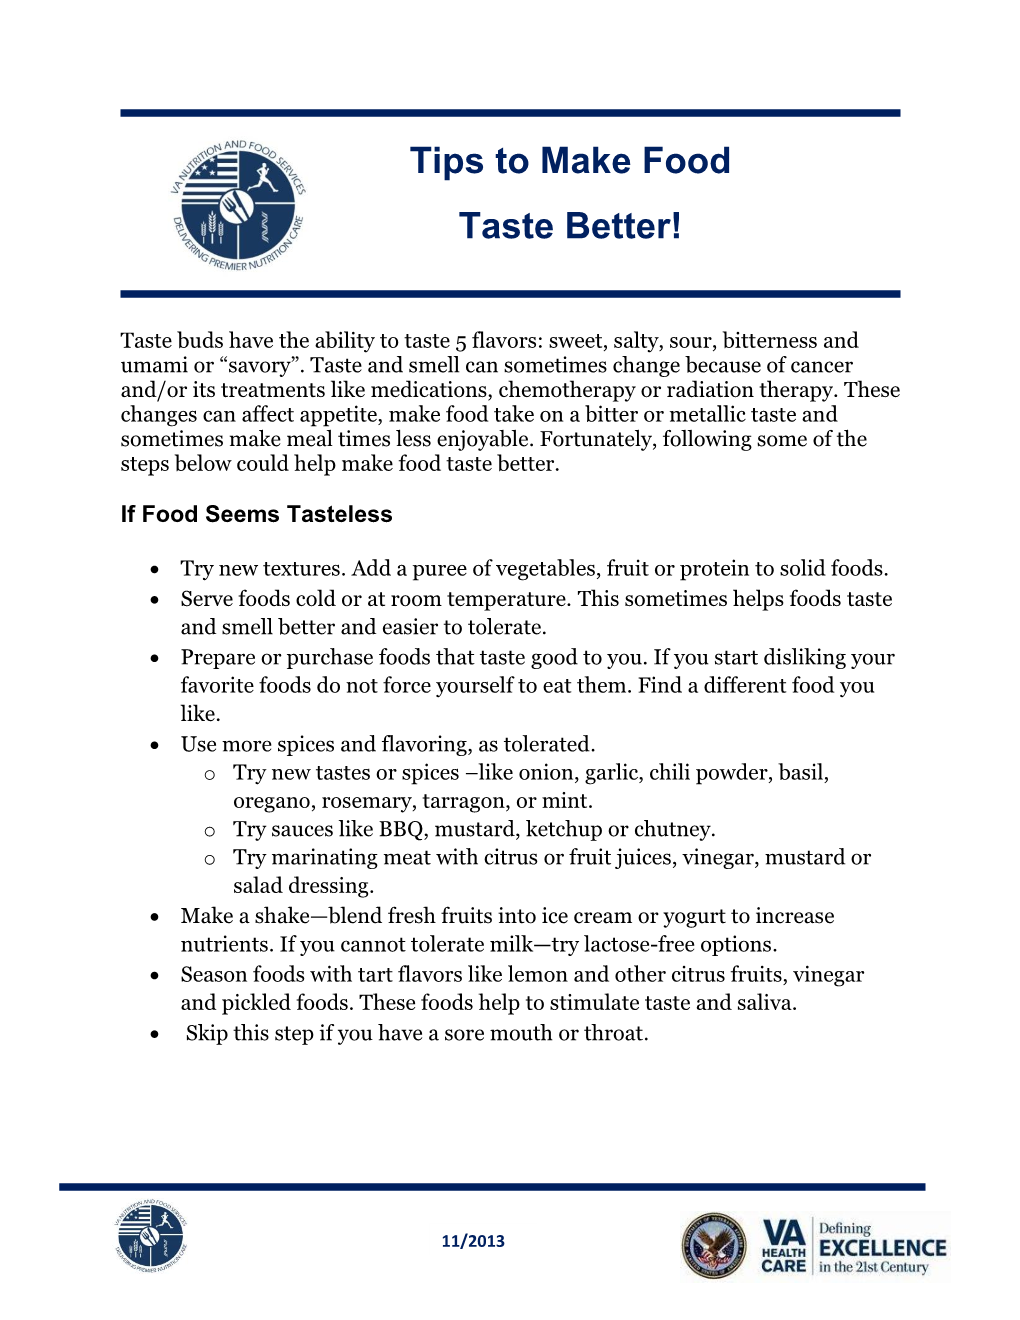 Tips to Make Food Taste Better!